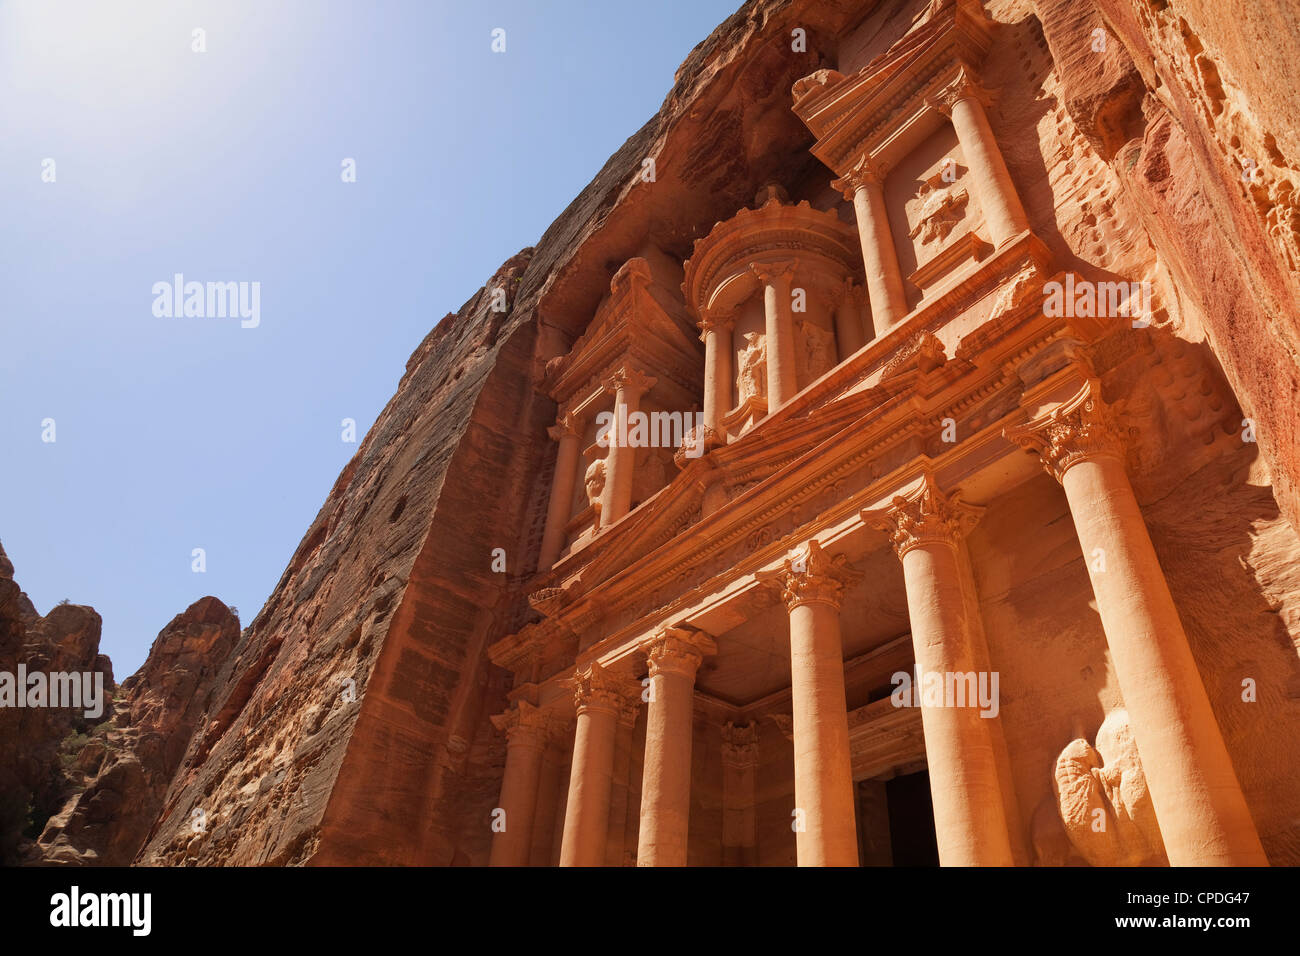 Die Fassade des Schatzhauses (Al Khazneh) geschnitzt in den roten Felsen bei Petra, UNESCO-Weltkulturerbe, Jordanien, Naher Osten Stockfoto